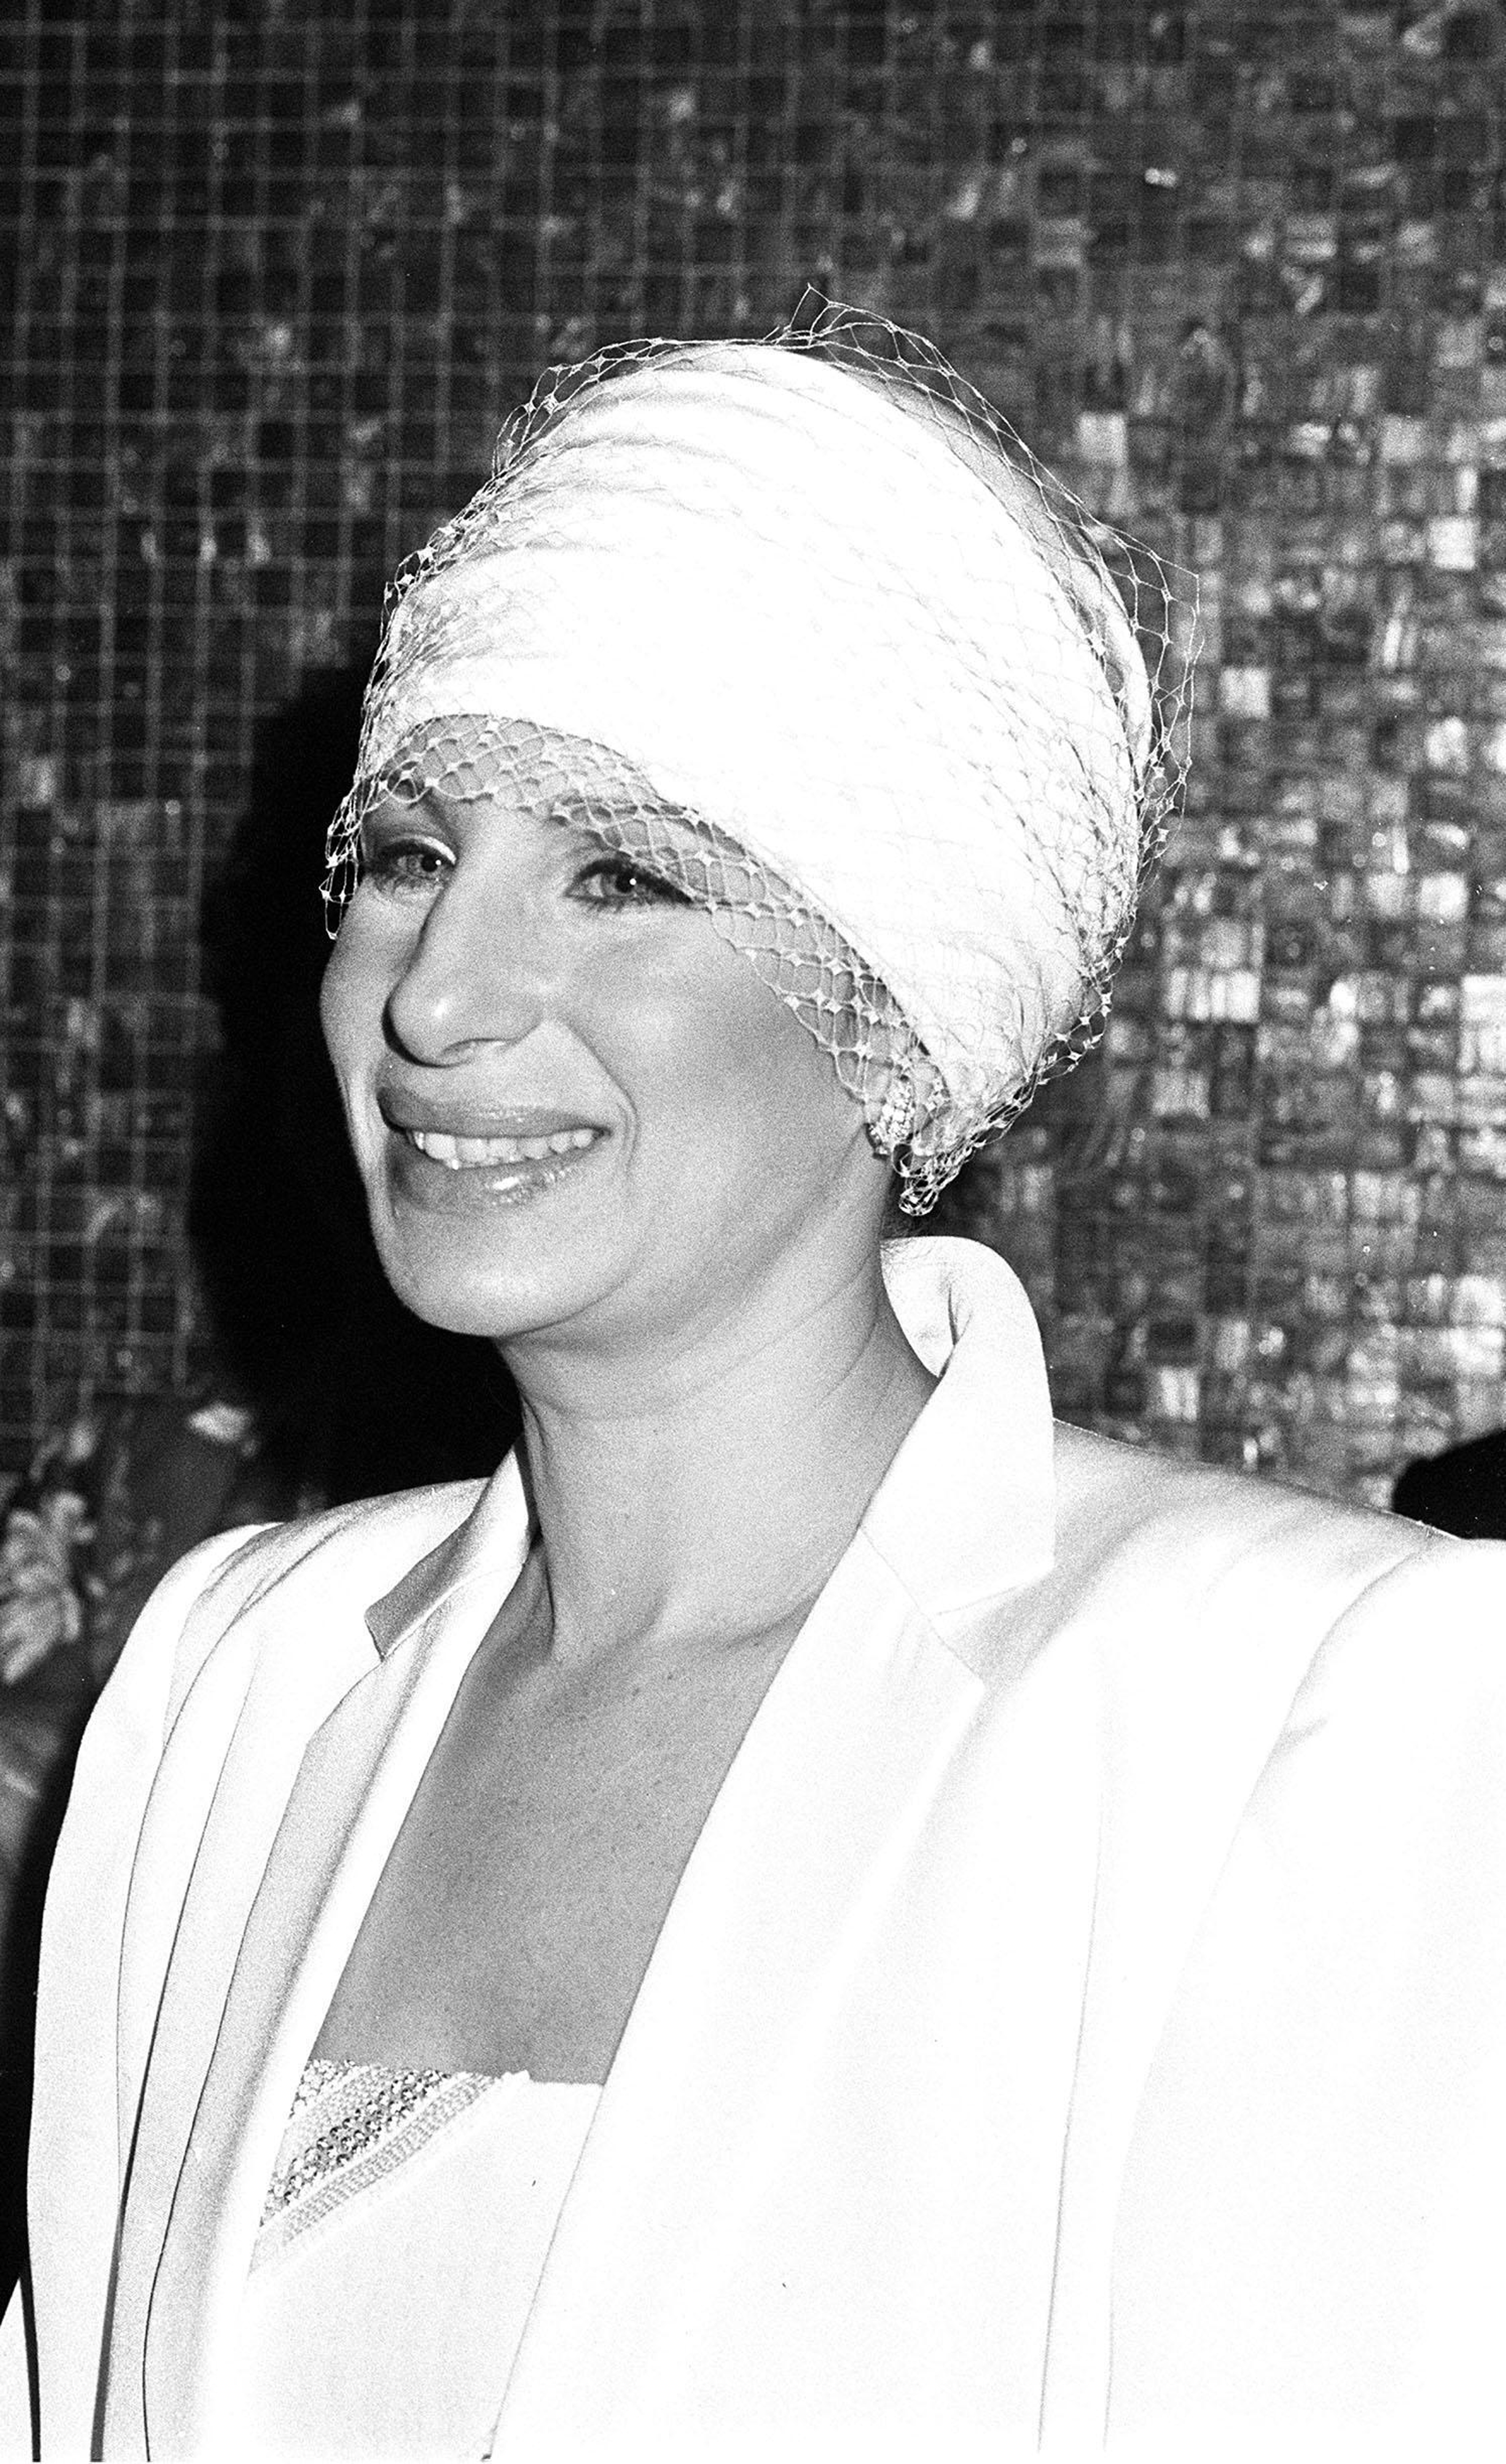 Barbra Streisand in London for the royal charity premiere of Yentl